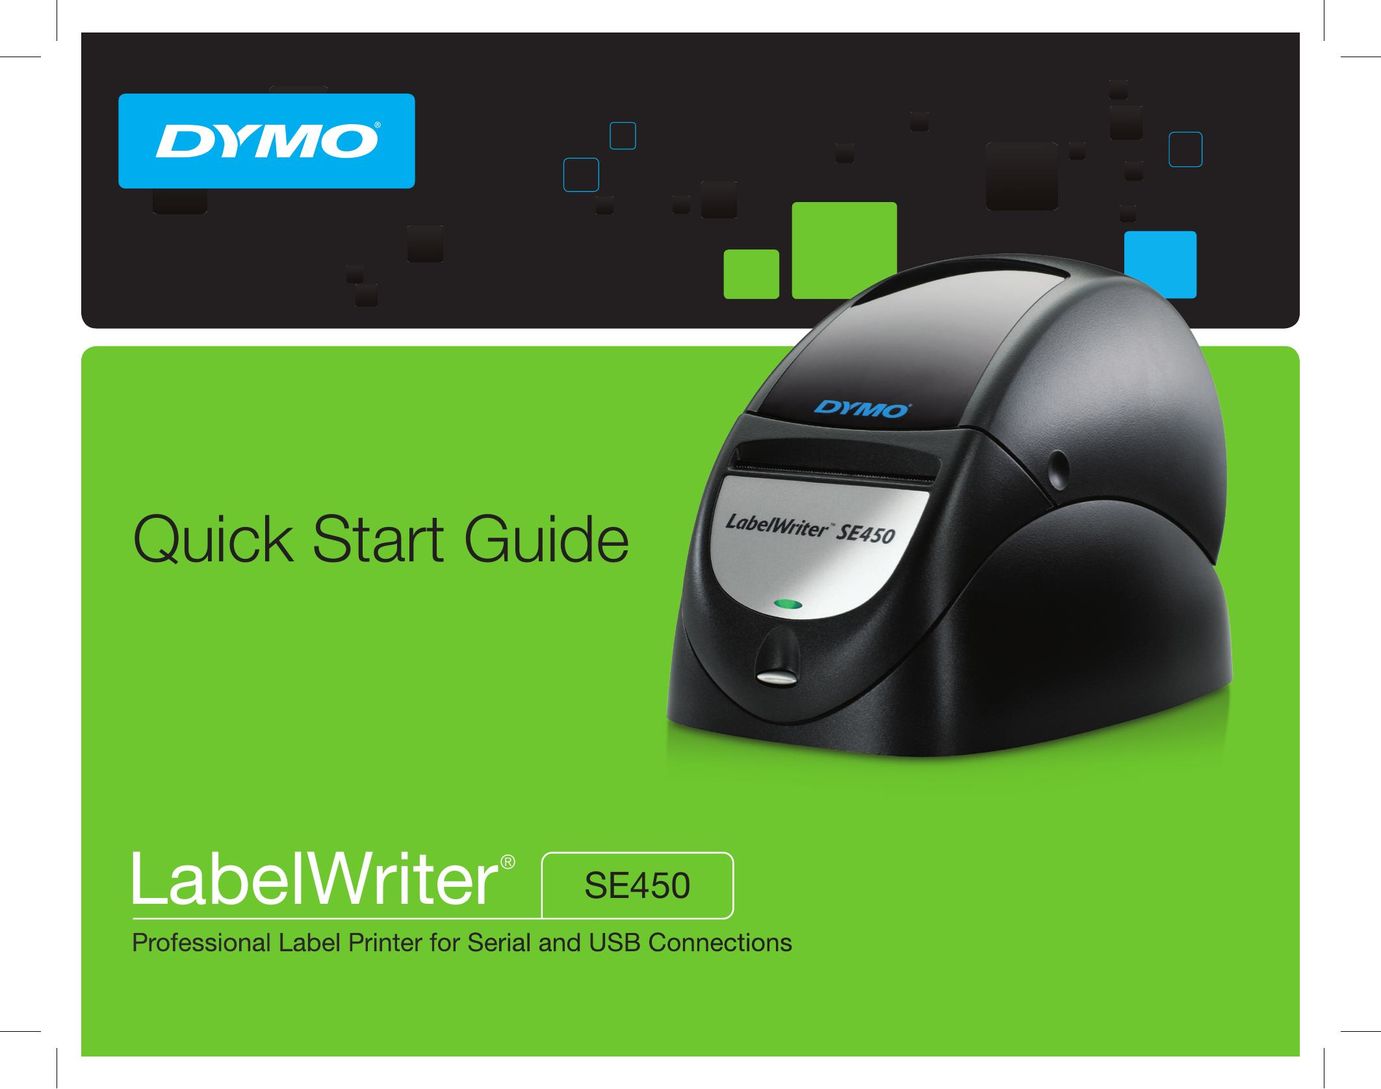 Dymo SE450 Label Maker User Manual